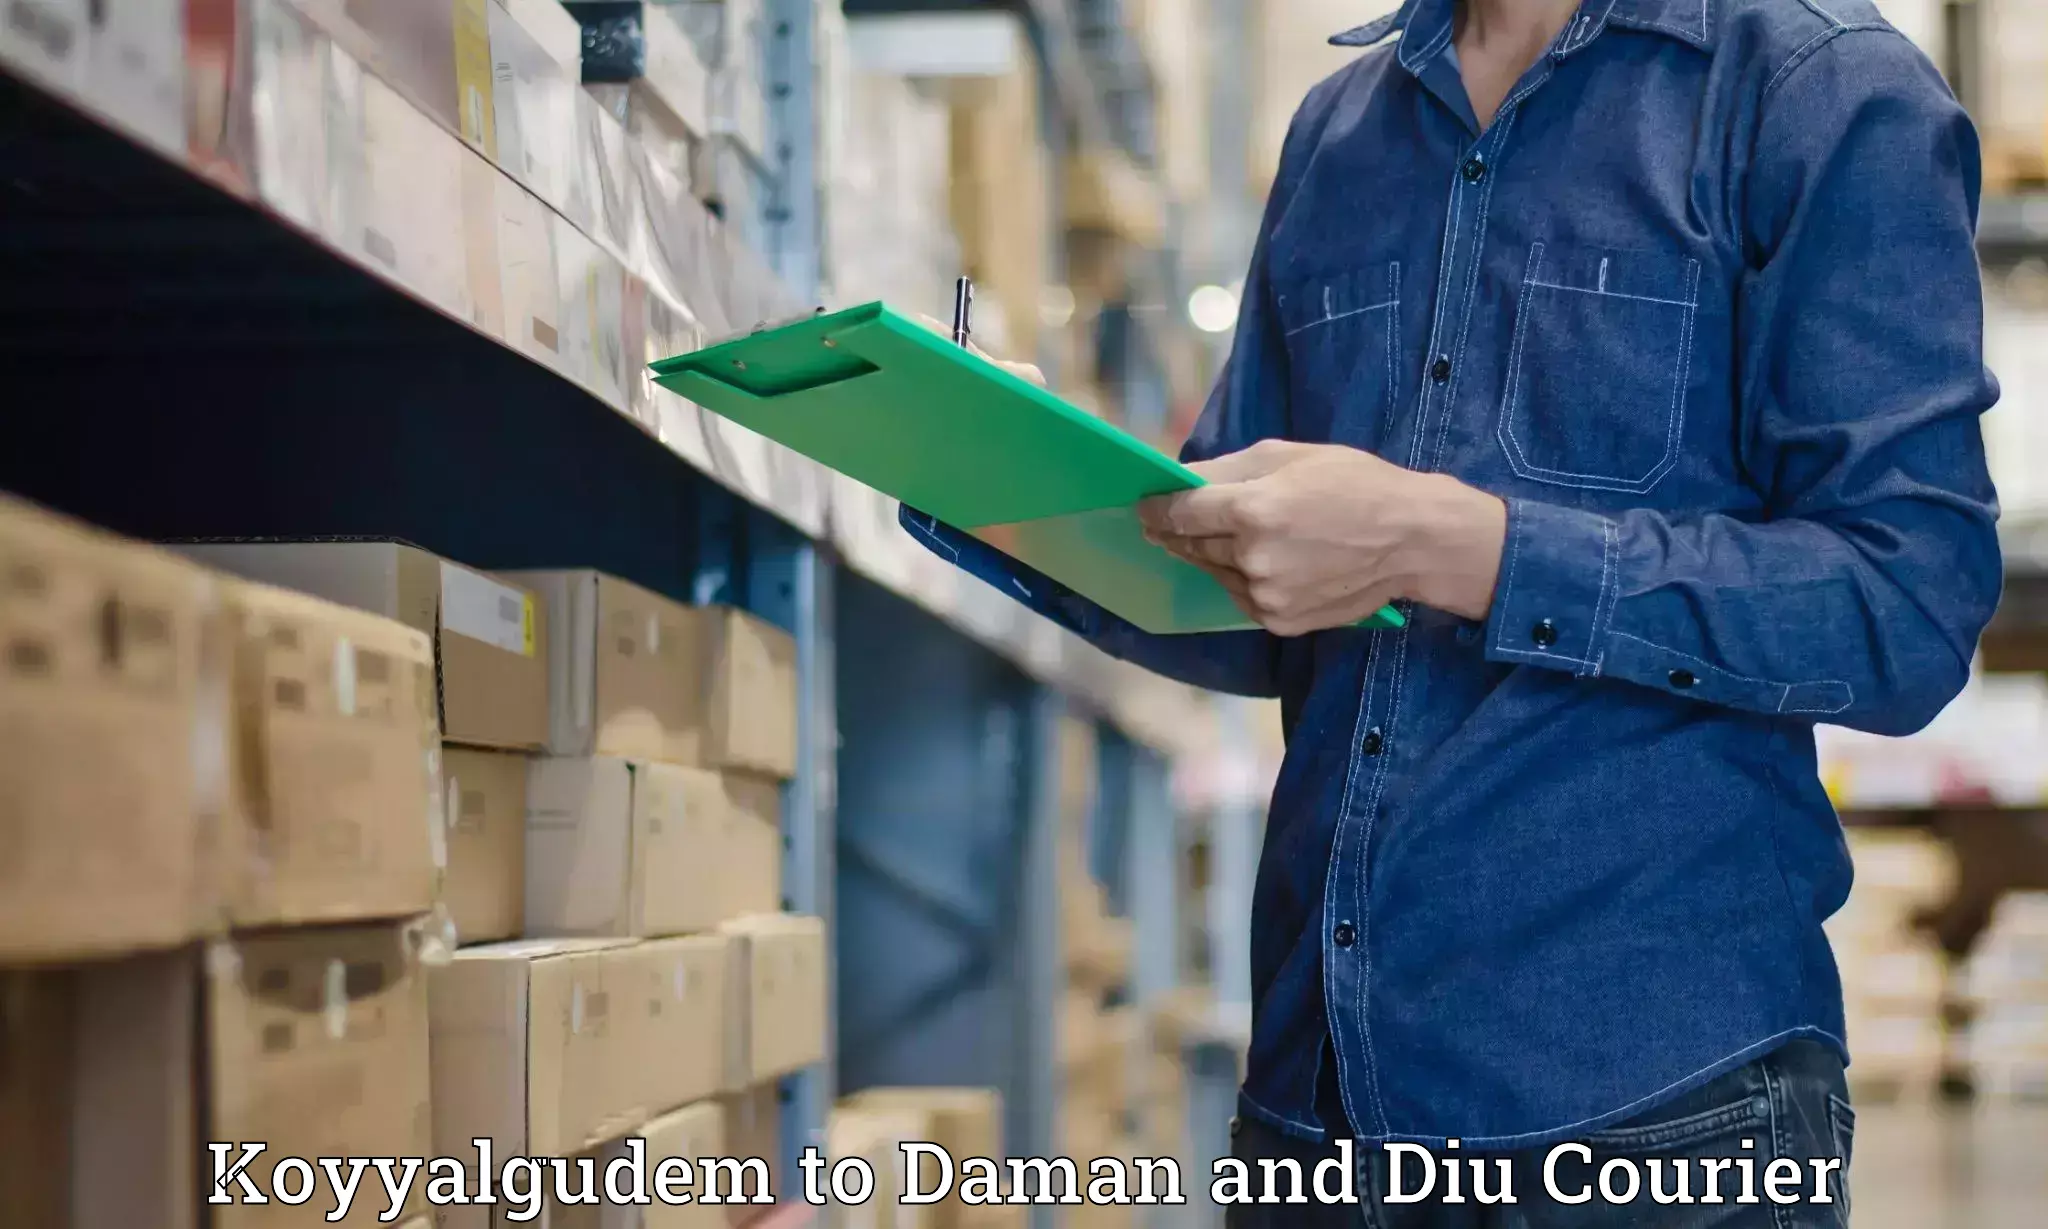 Professional courier handling in Koyyalgudem to Daman and Diu